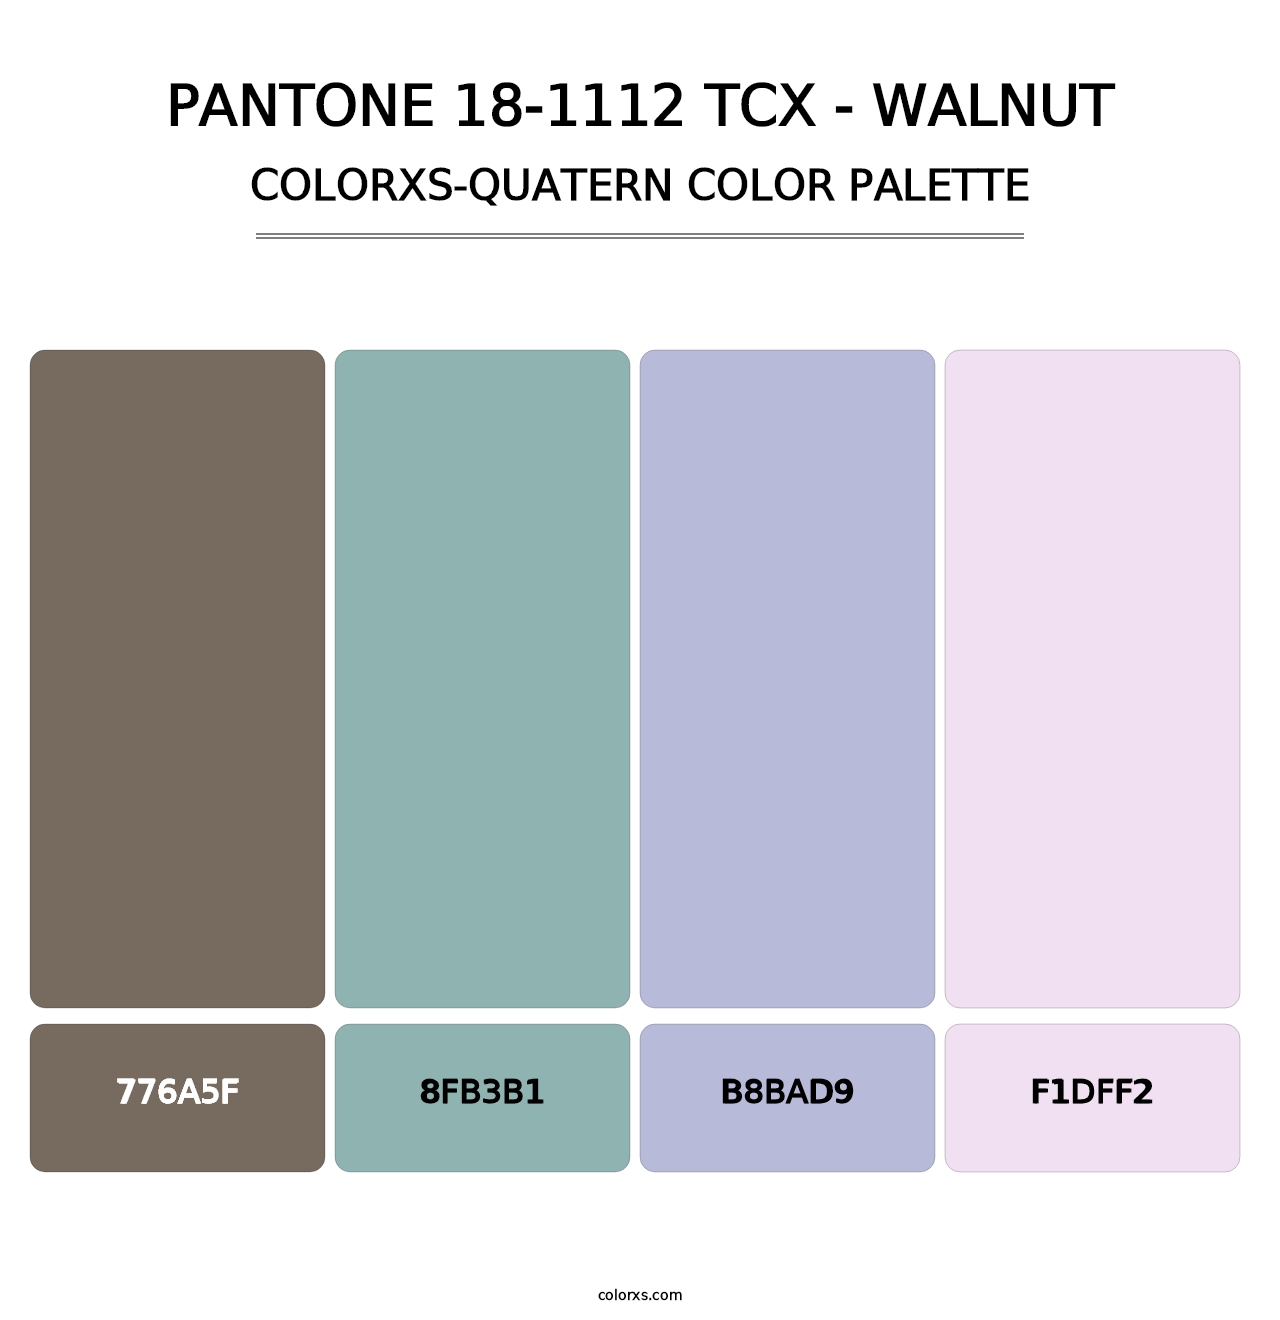 PANTONE 18-1112 TCX - Walnut - Colorxs Quatern Palette